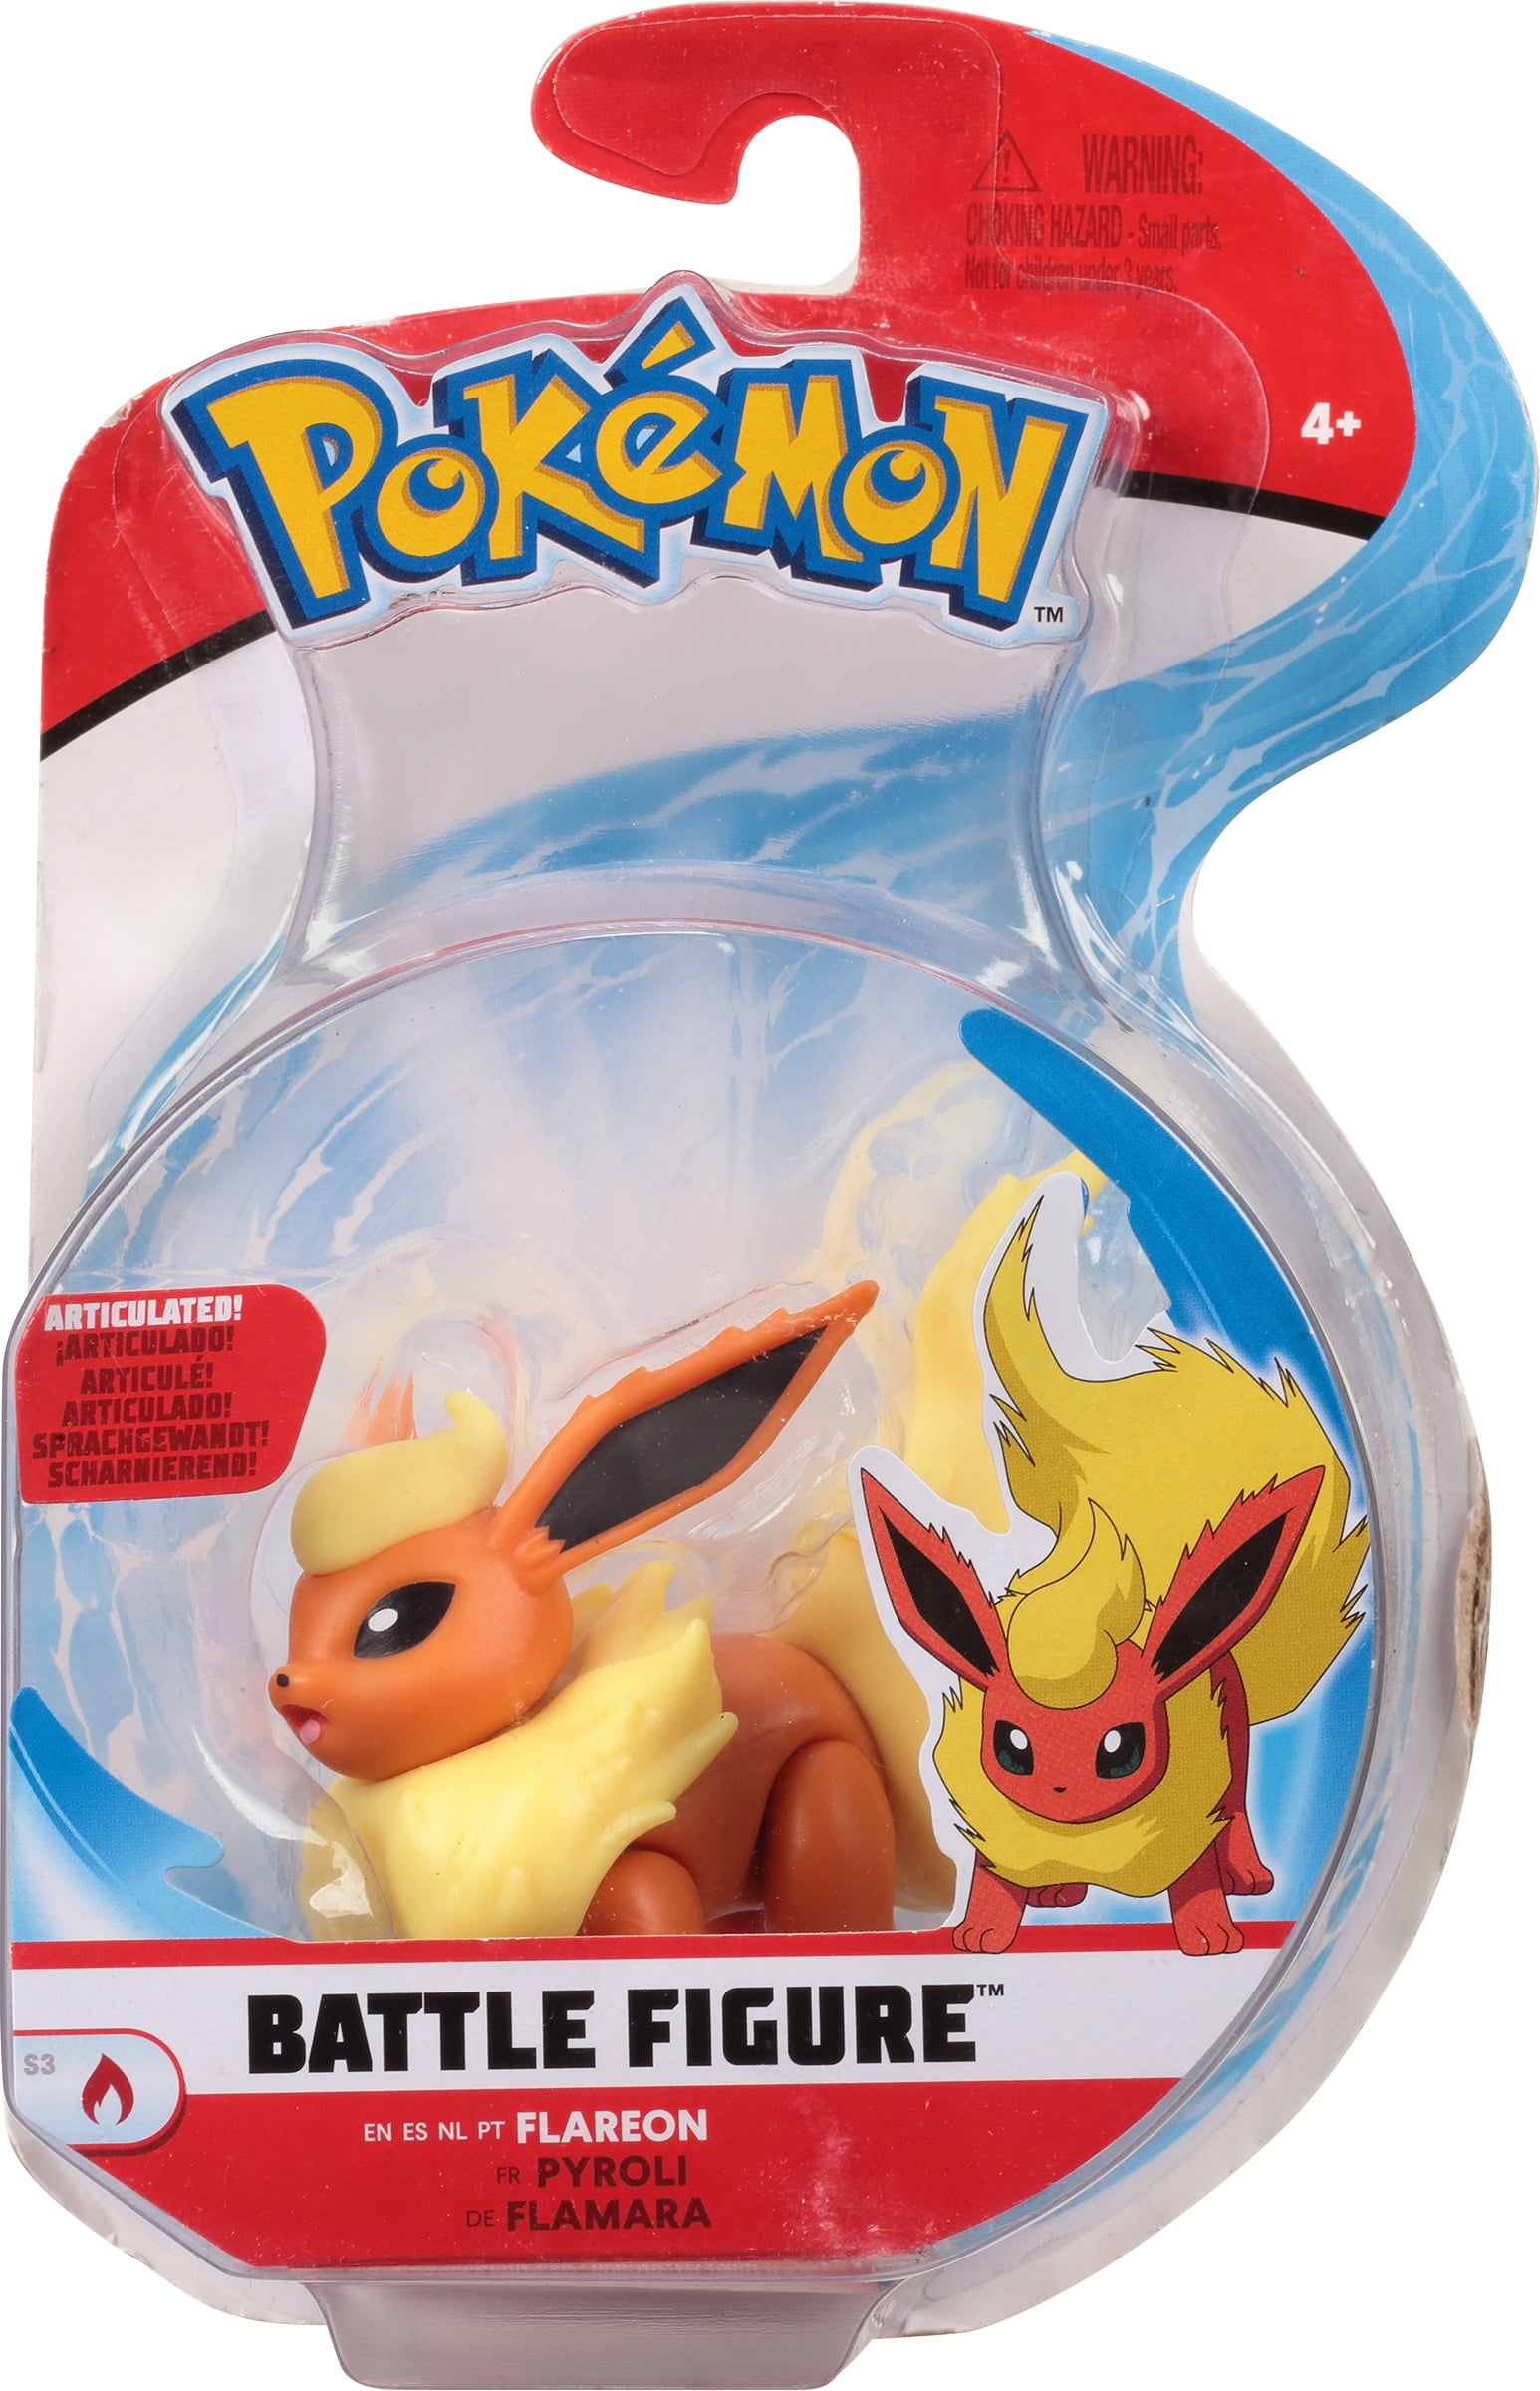 LX Pokemon Pikachu & Charmander Battle Figure Pack New in Package 